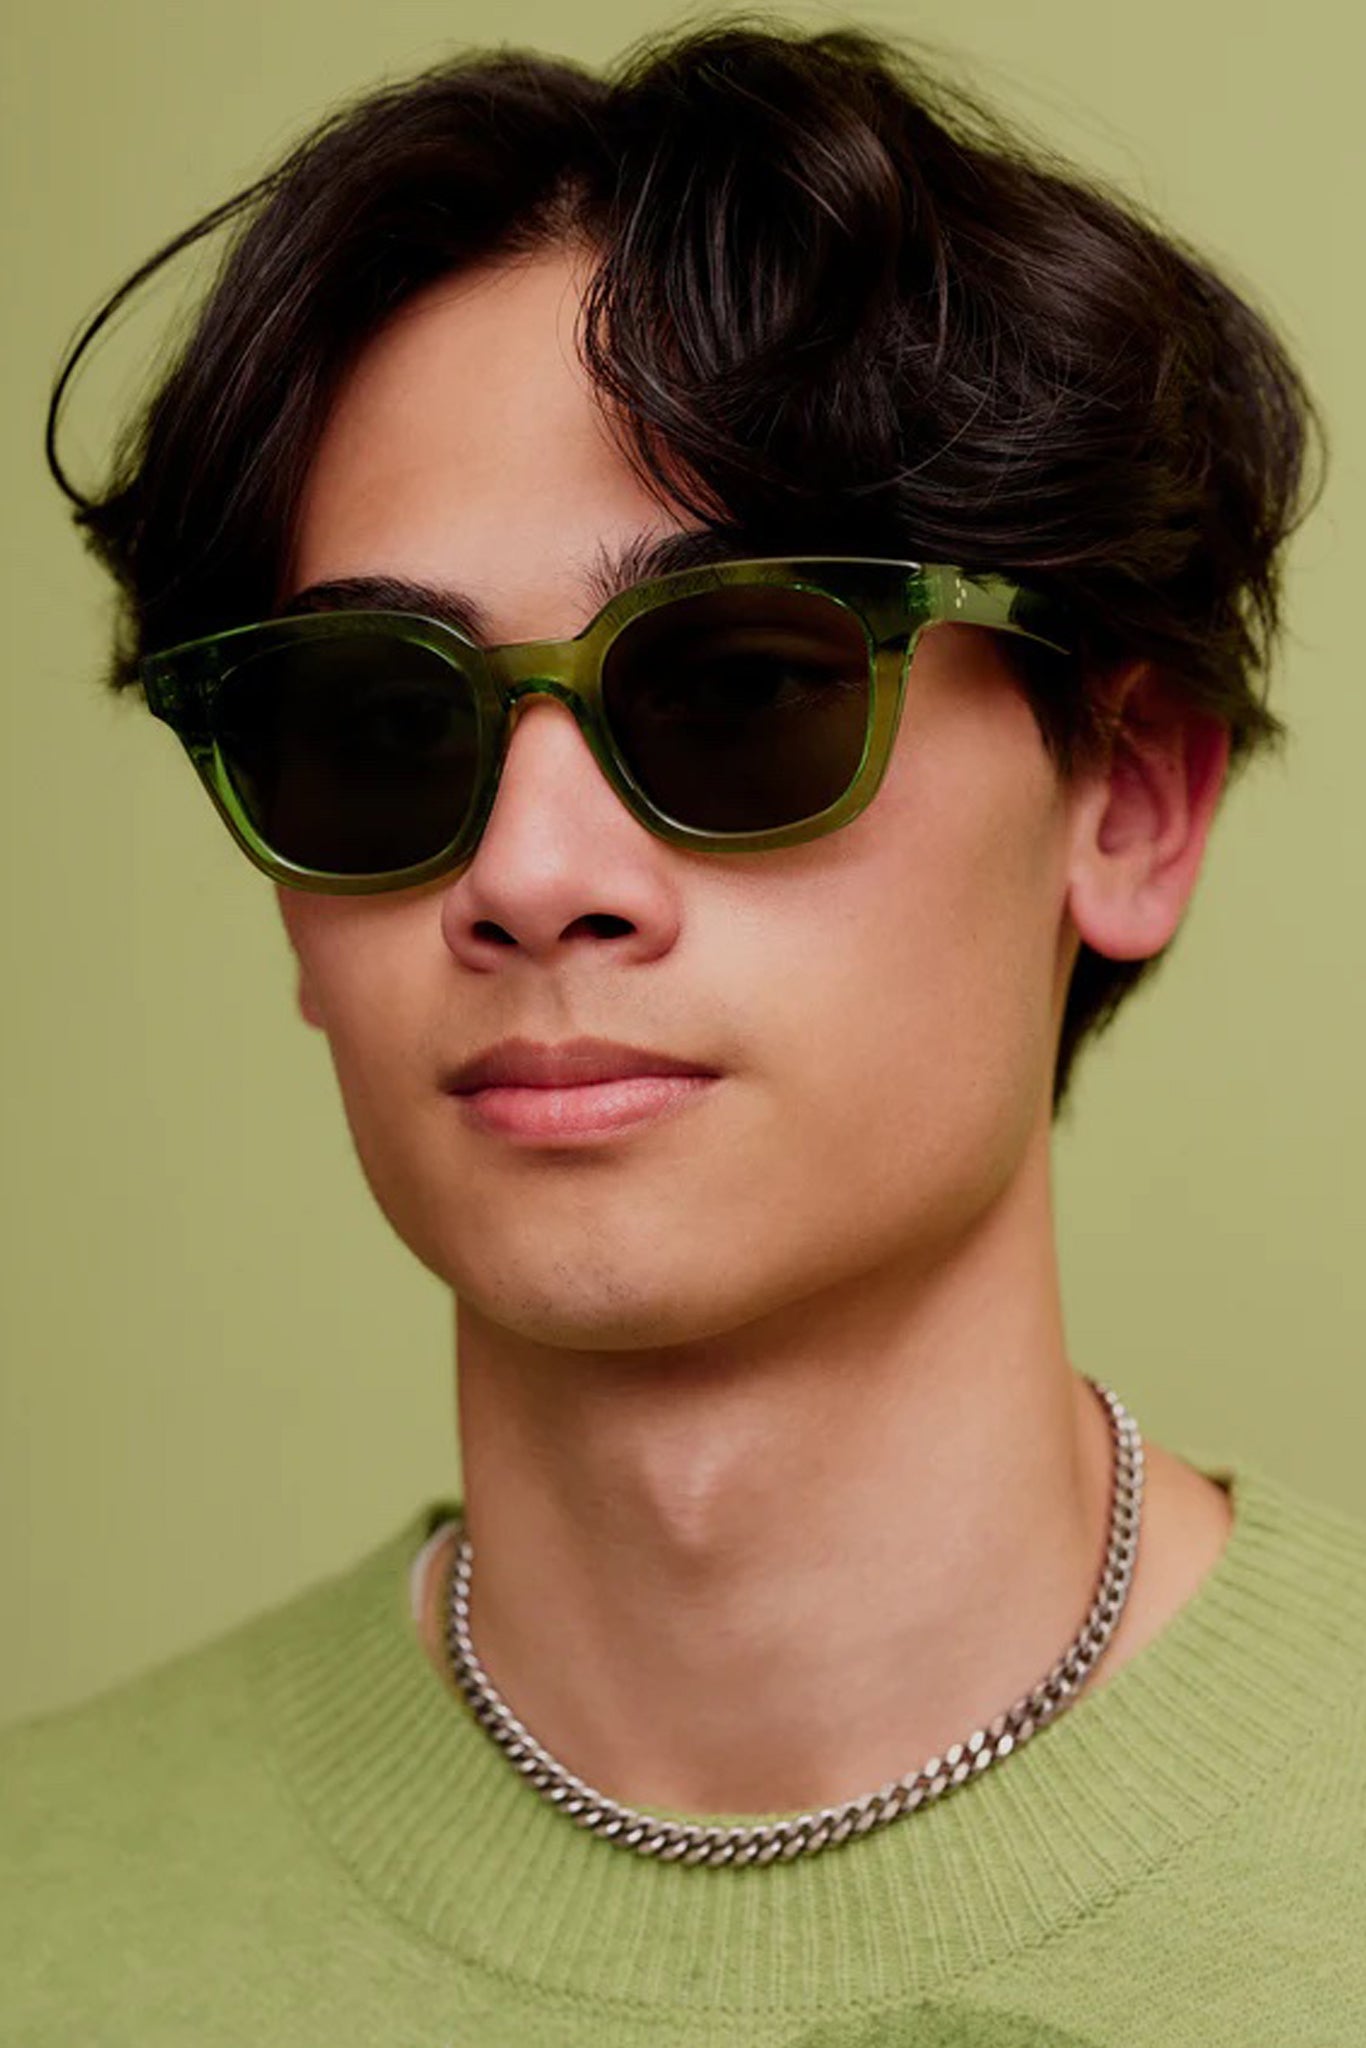 Sunglasses in Green Acetate